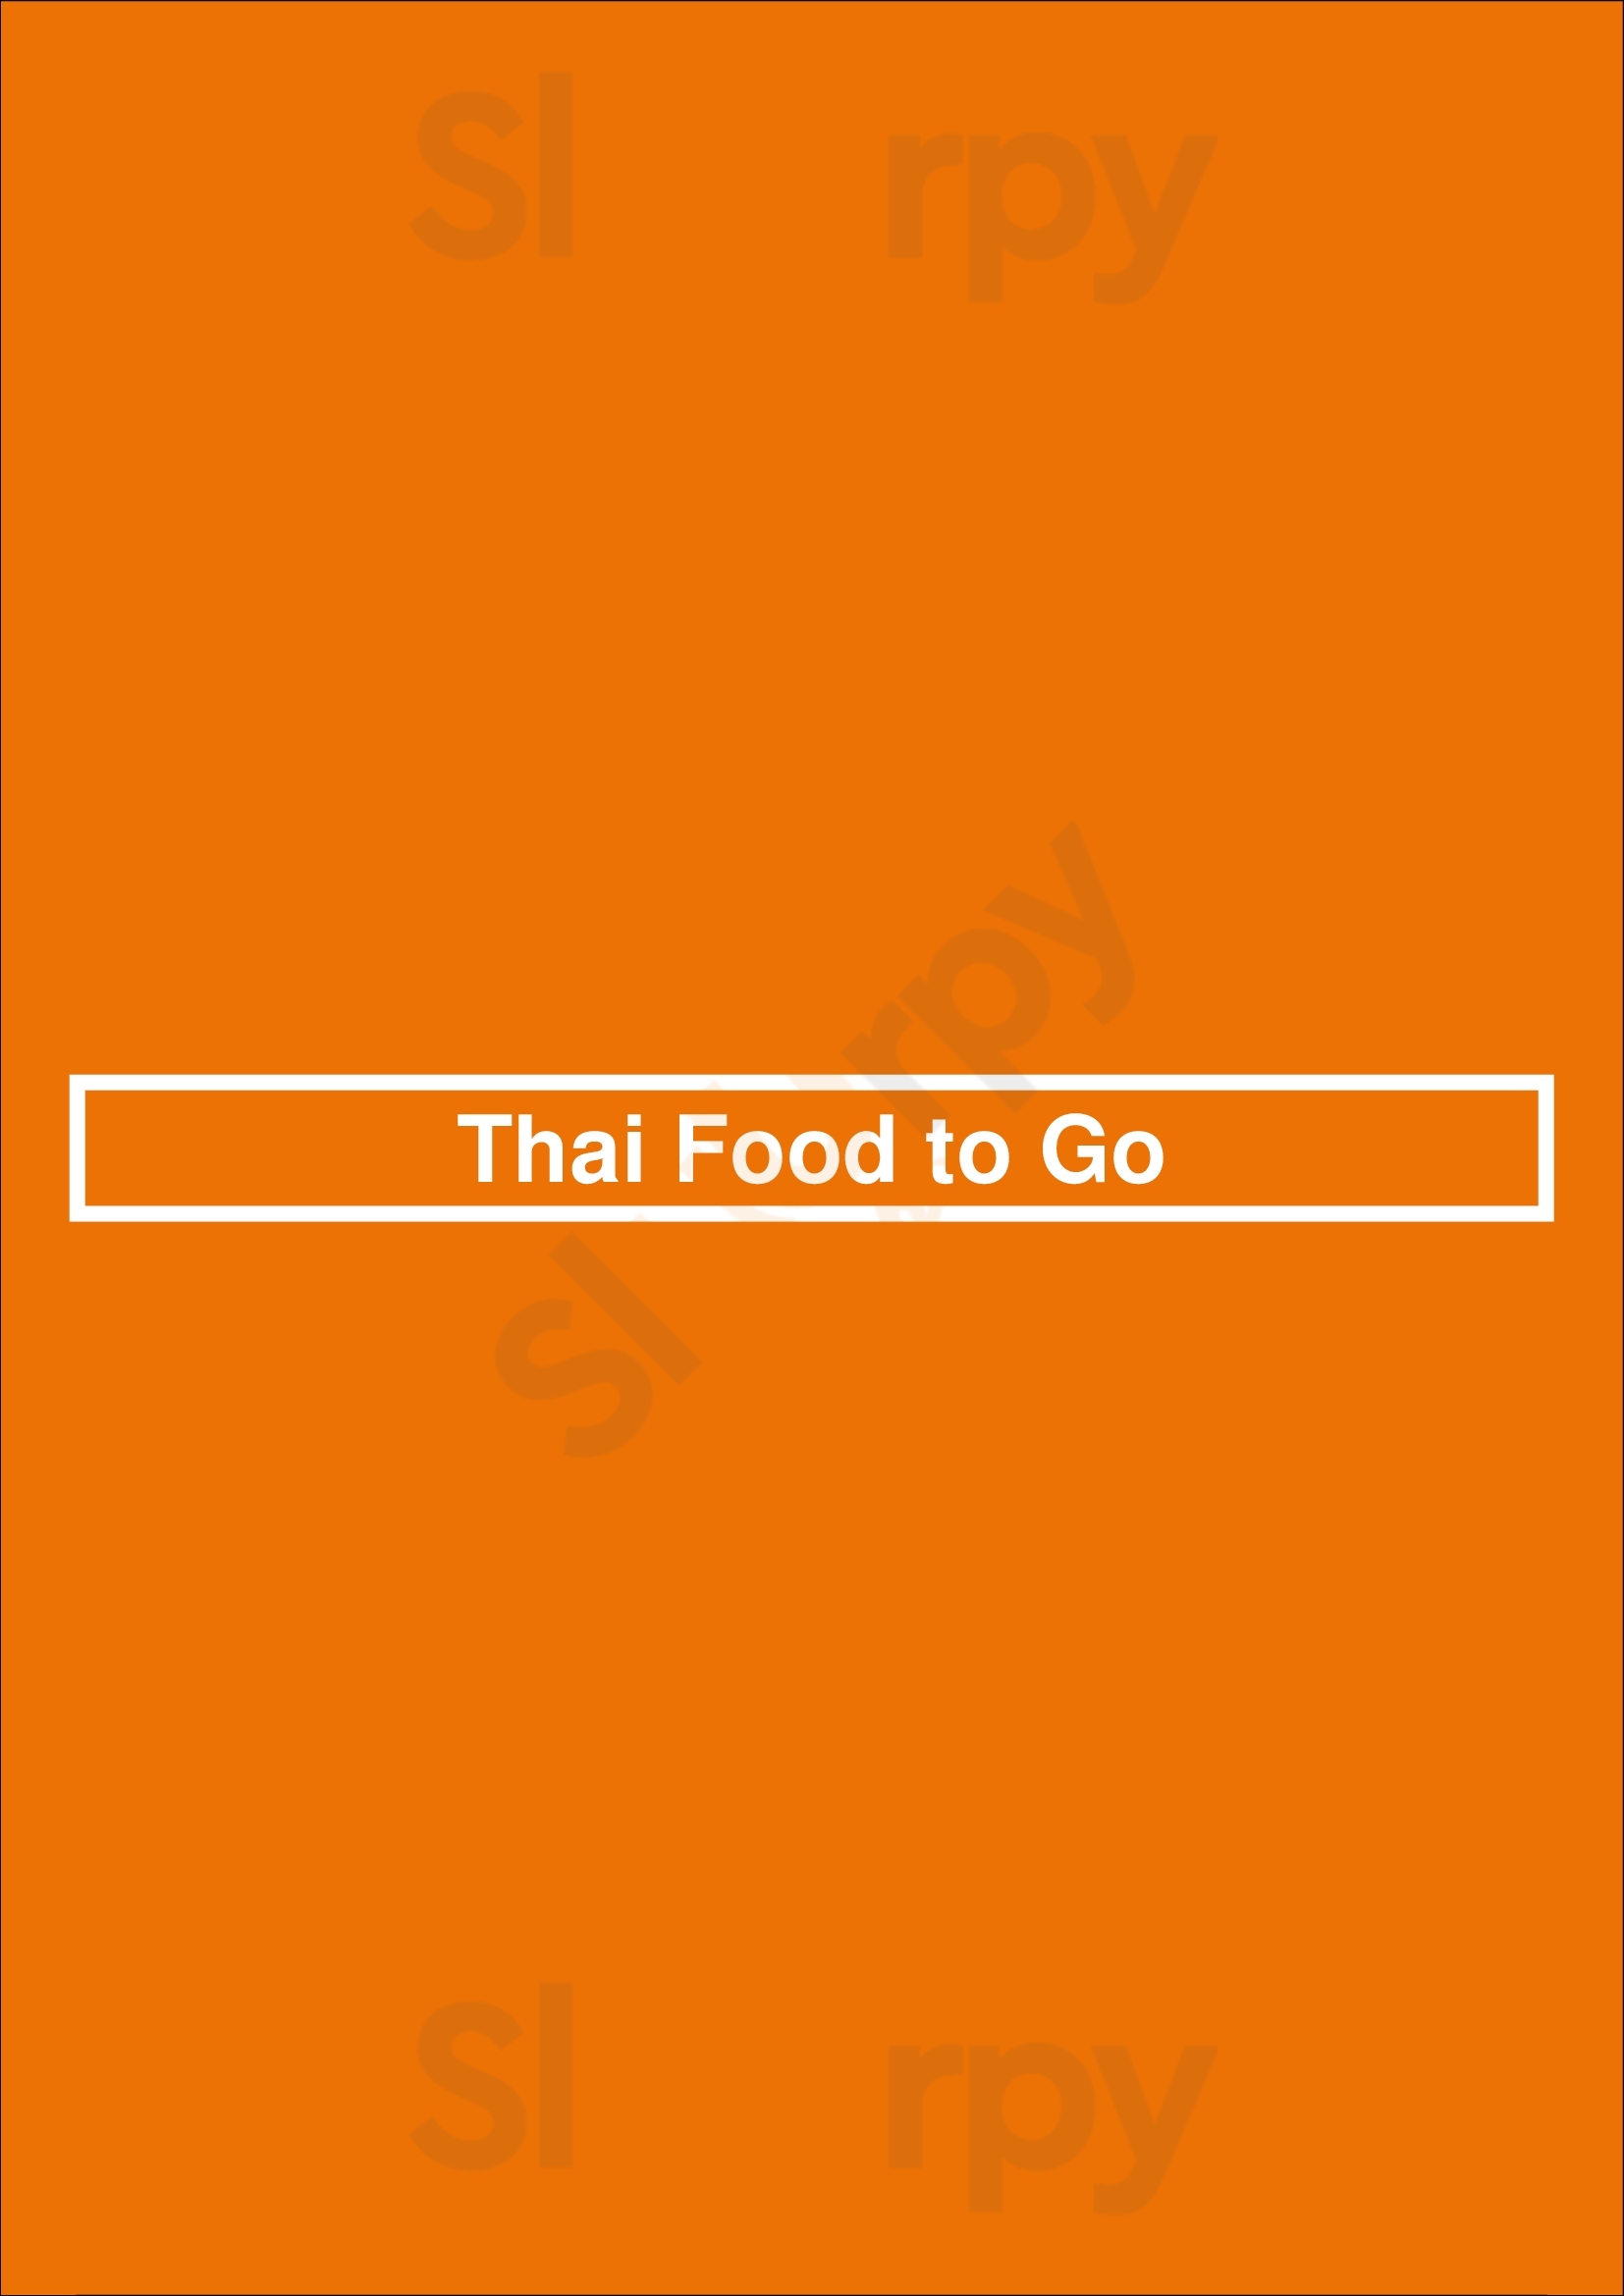 Thai Food To Go Las Vegas Menu - 1